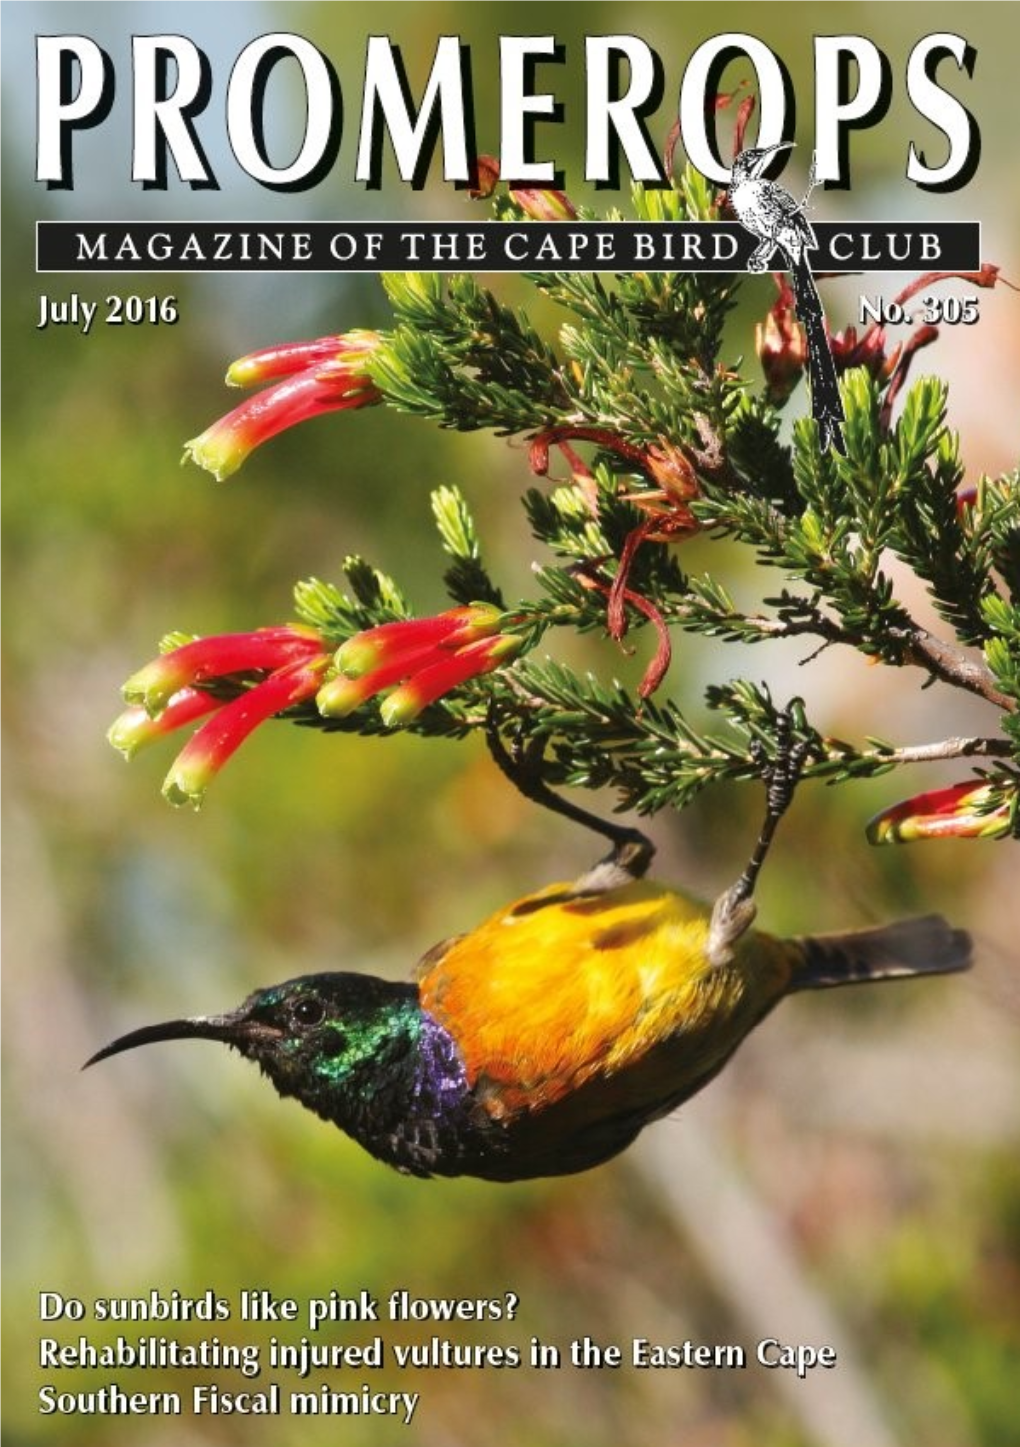 Promerops: Magazine of the Cape Bird Club Issue No. 305, July 2016